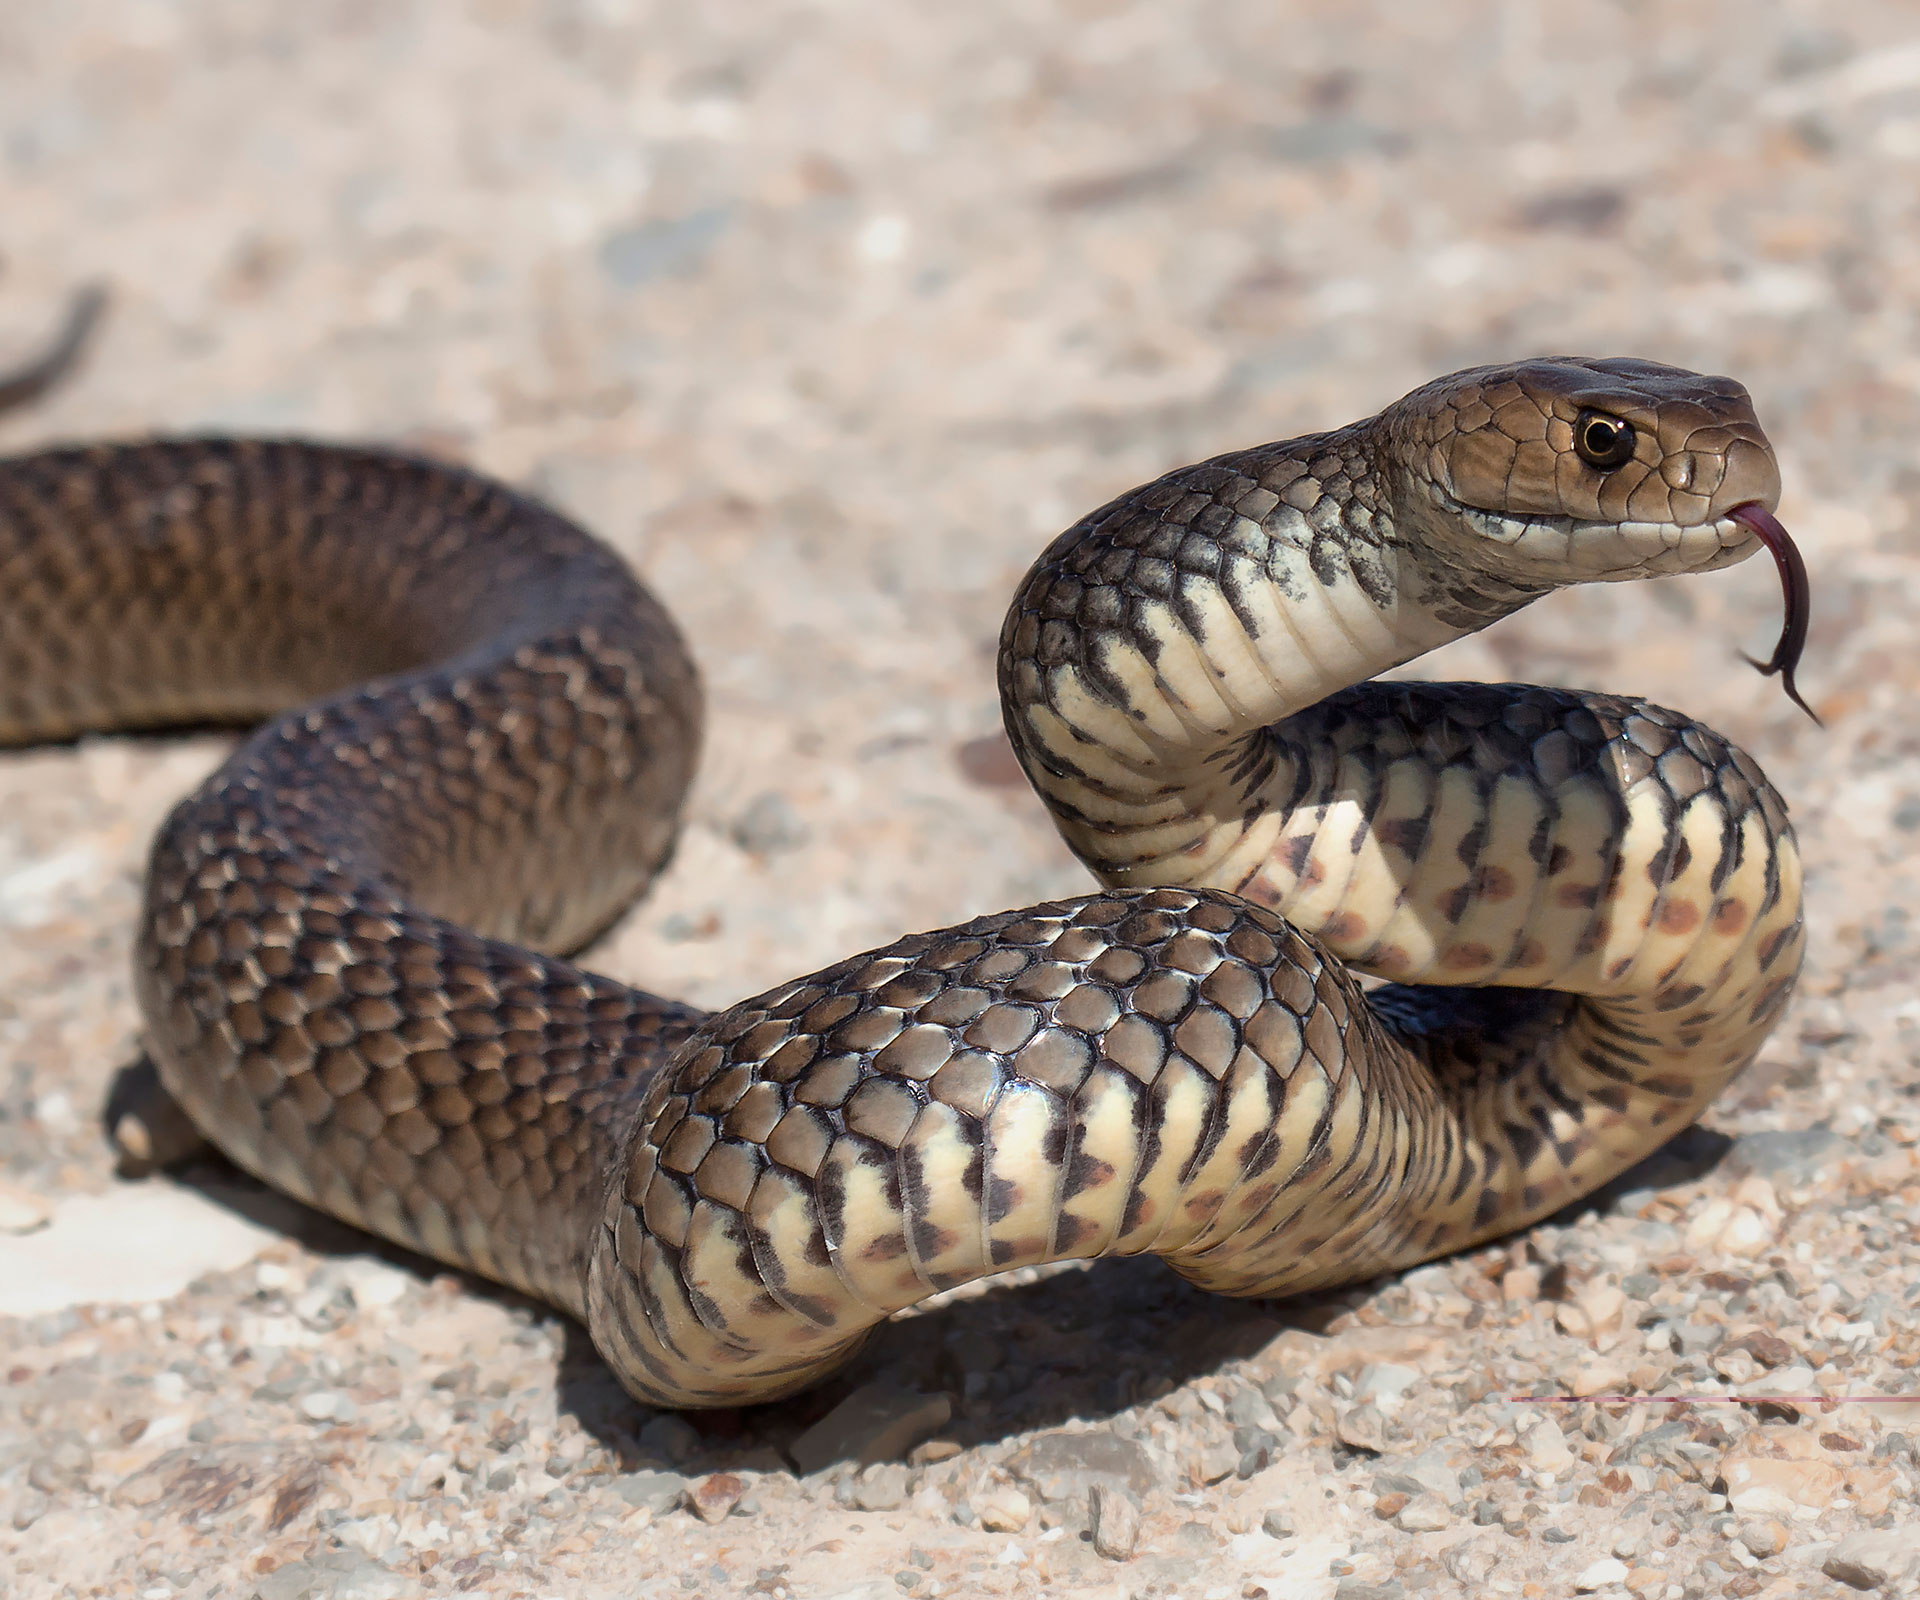 Girl, 6, dies after brown snake bite